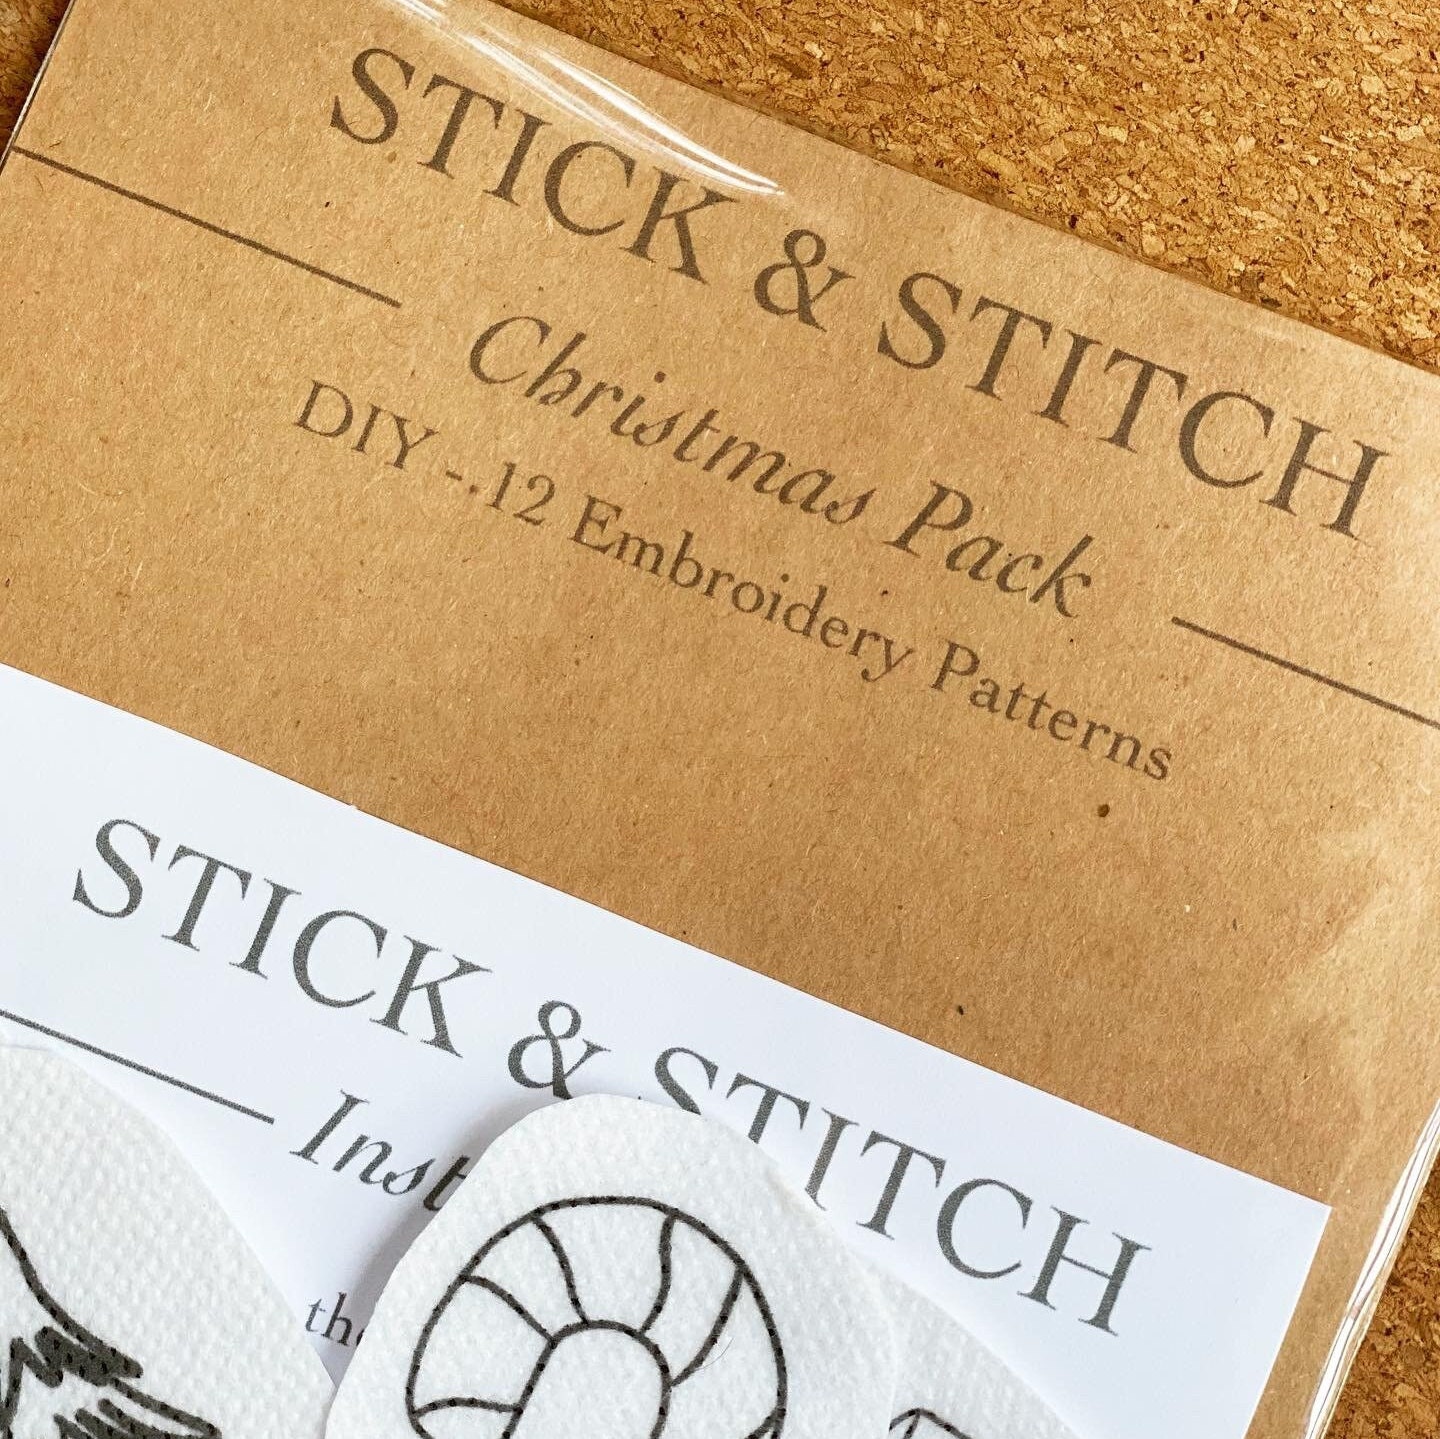 Summer Stick Stitch Embroidery Designs, 41% OFF